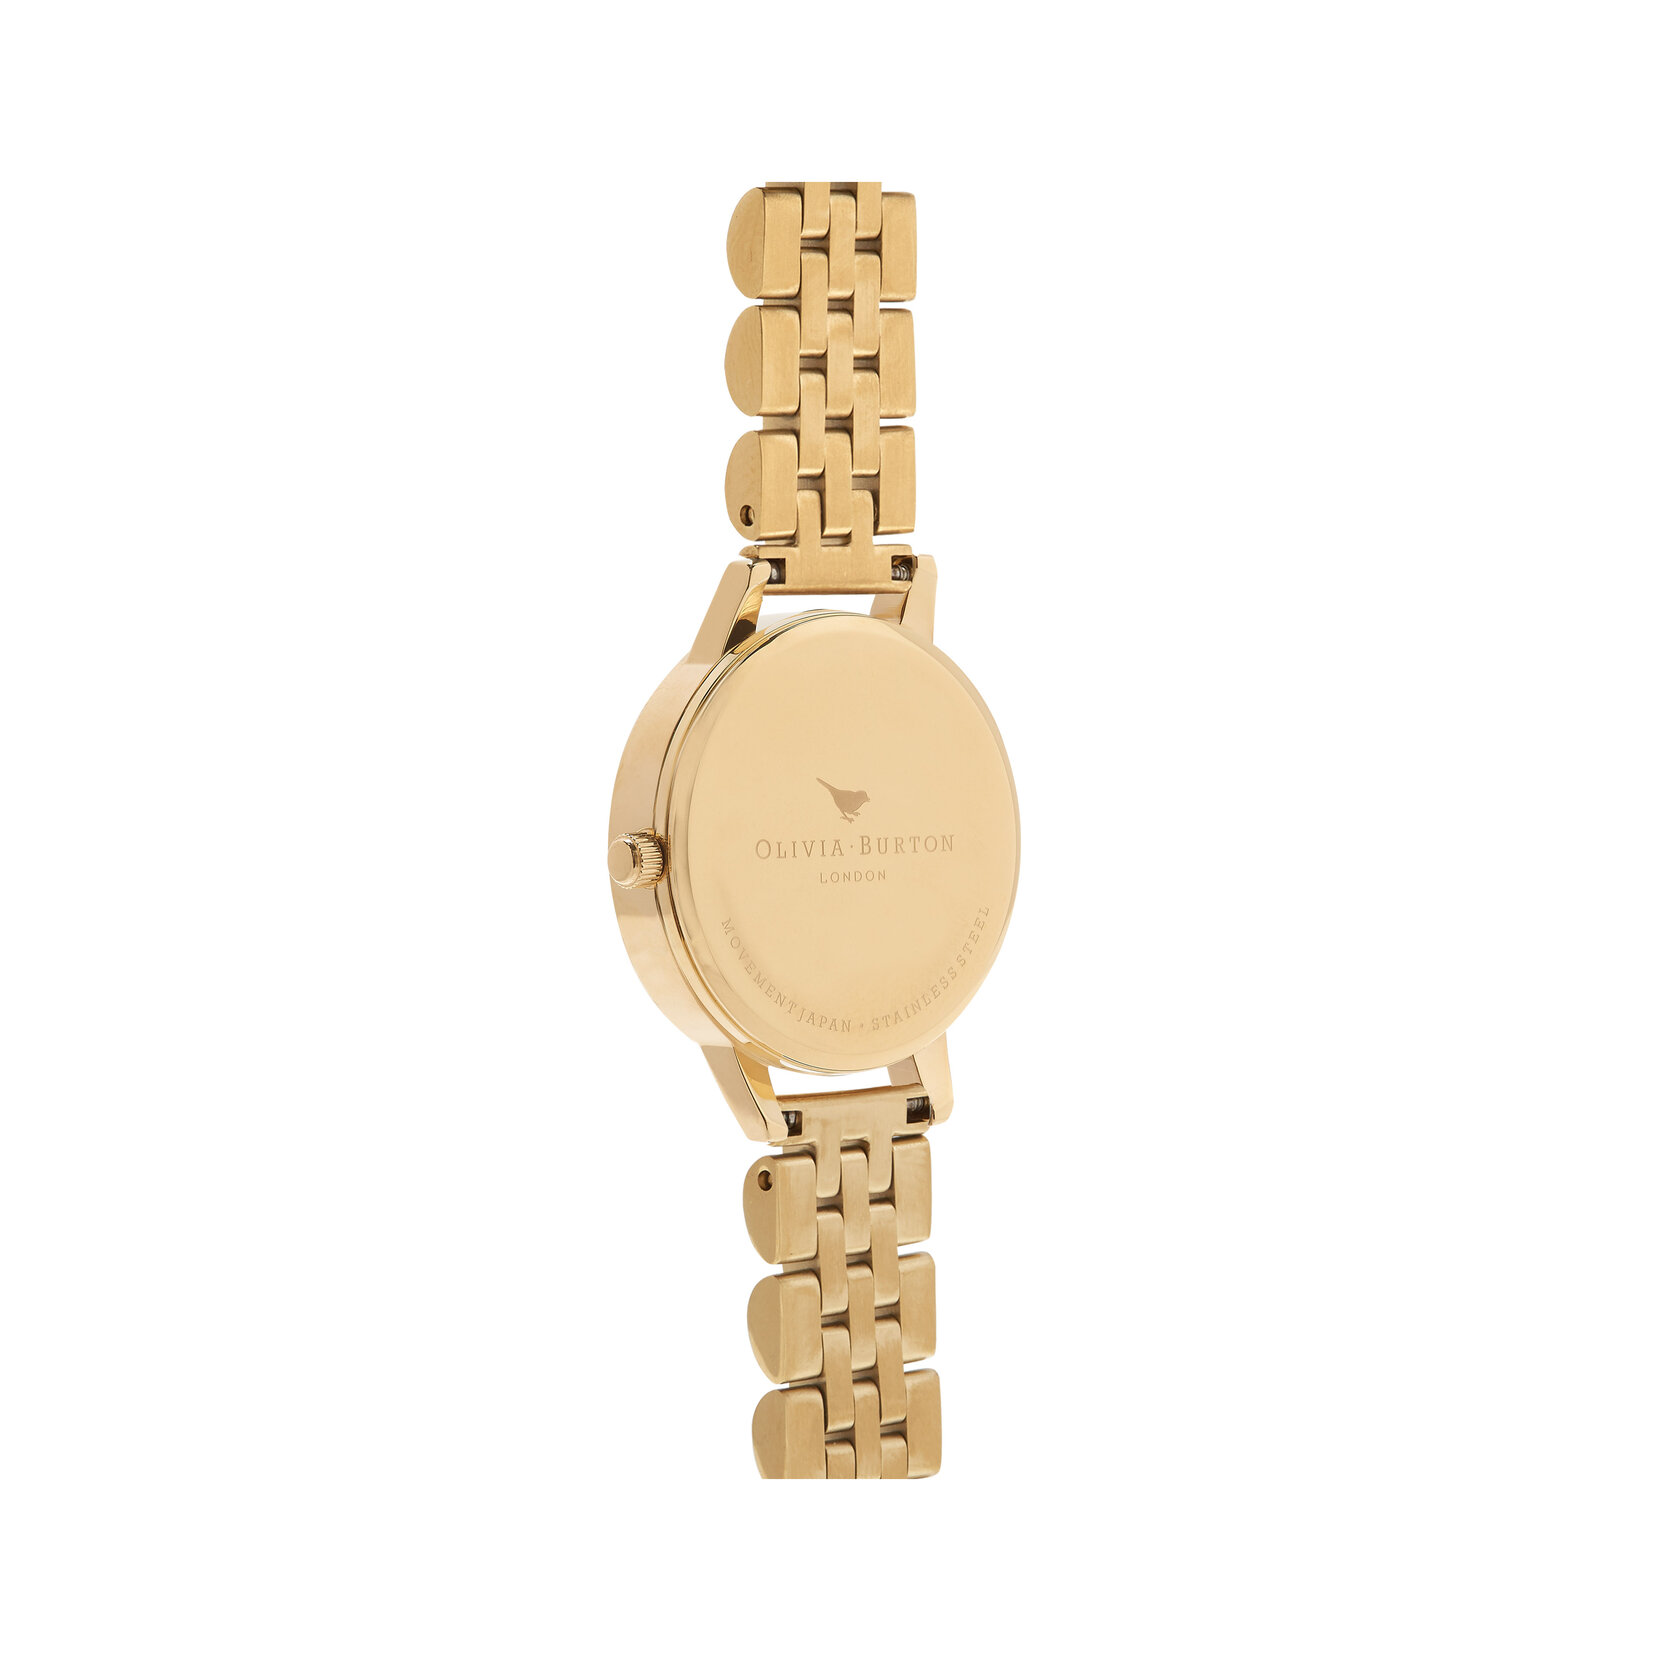 30mm White & Gold Bracelet Watch